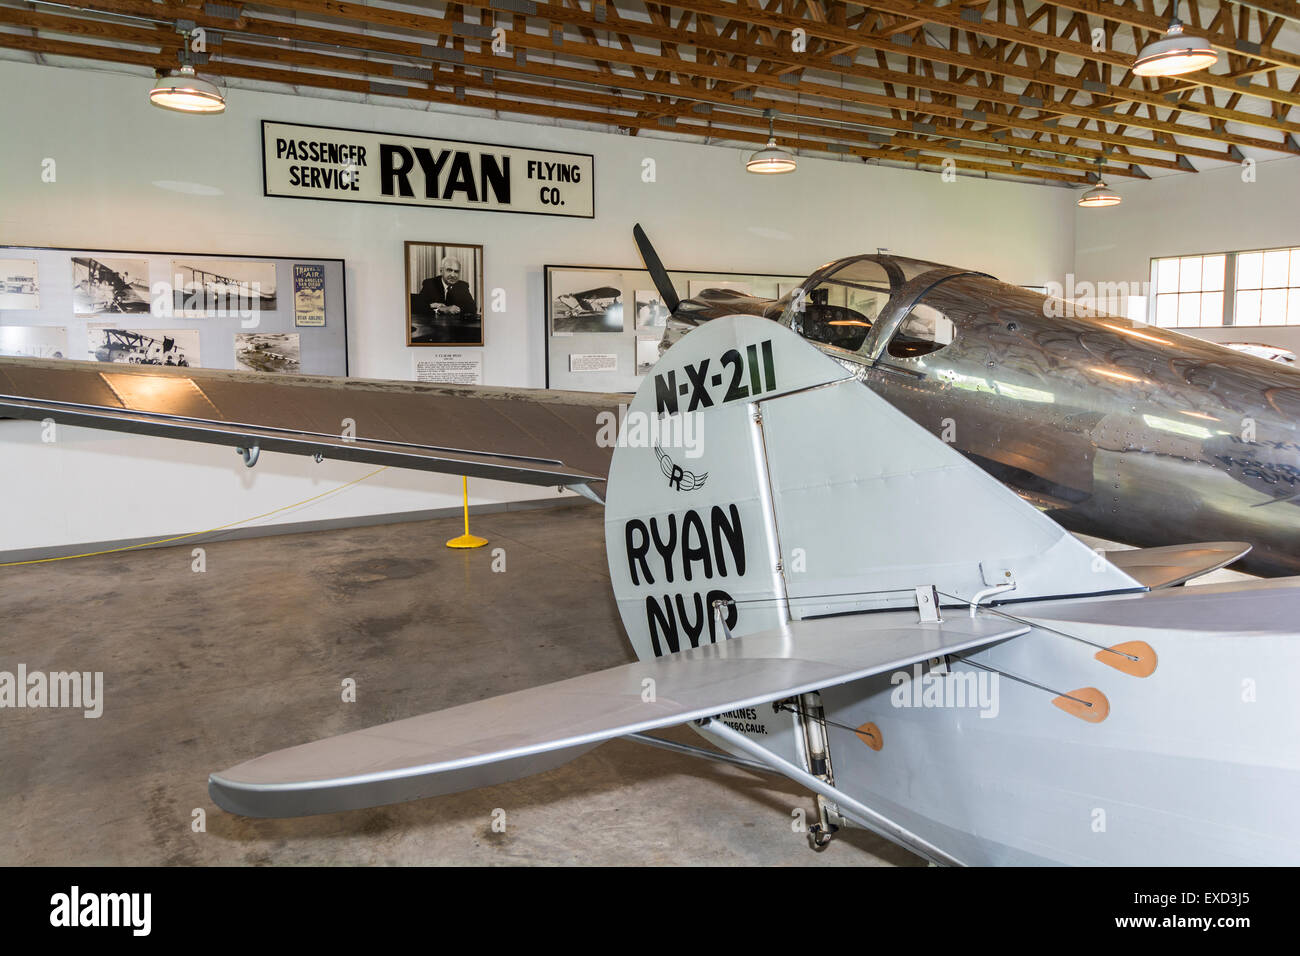 Wisconsin, Oshkosh, Experimental Aircraft Association, EAA AirVenture Museum, Pioneer Airport, Ryan Flying Co. exhibit Stock Photo